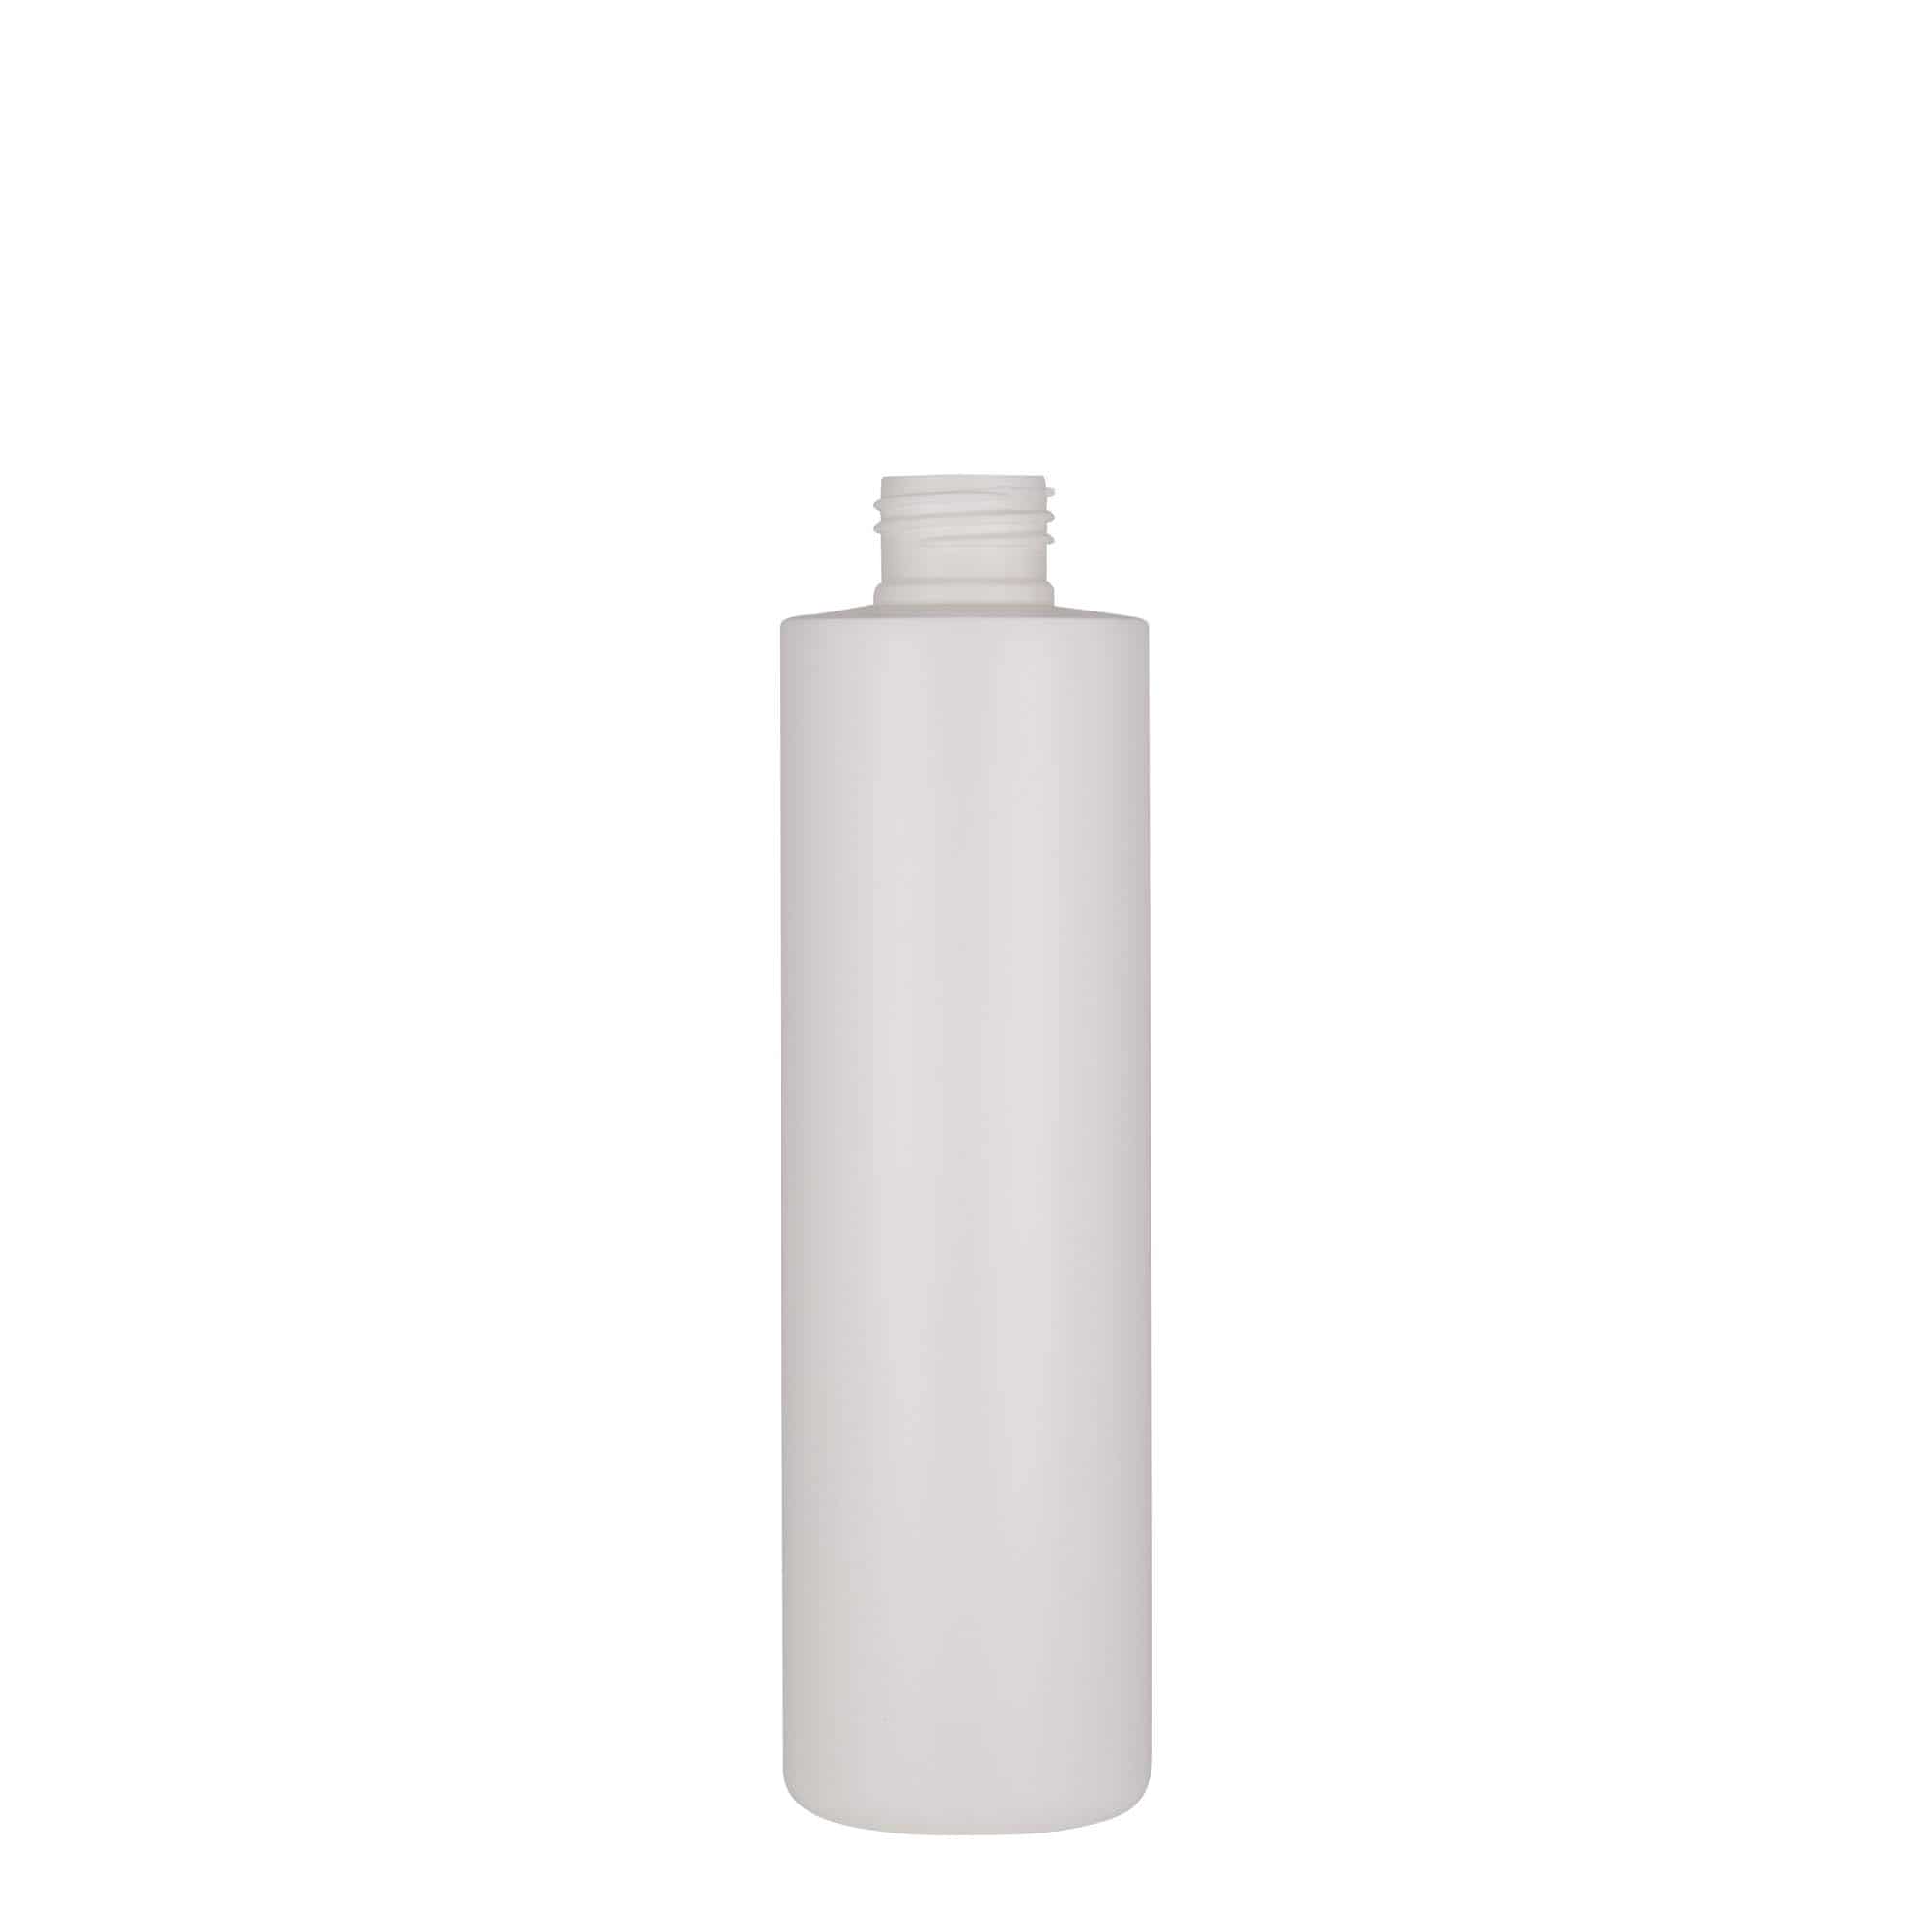 250 ml plastic bottle 'Pipe', HDPE, white, closure: GPI 24/410